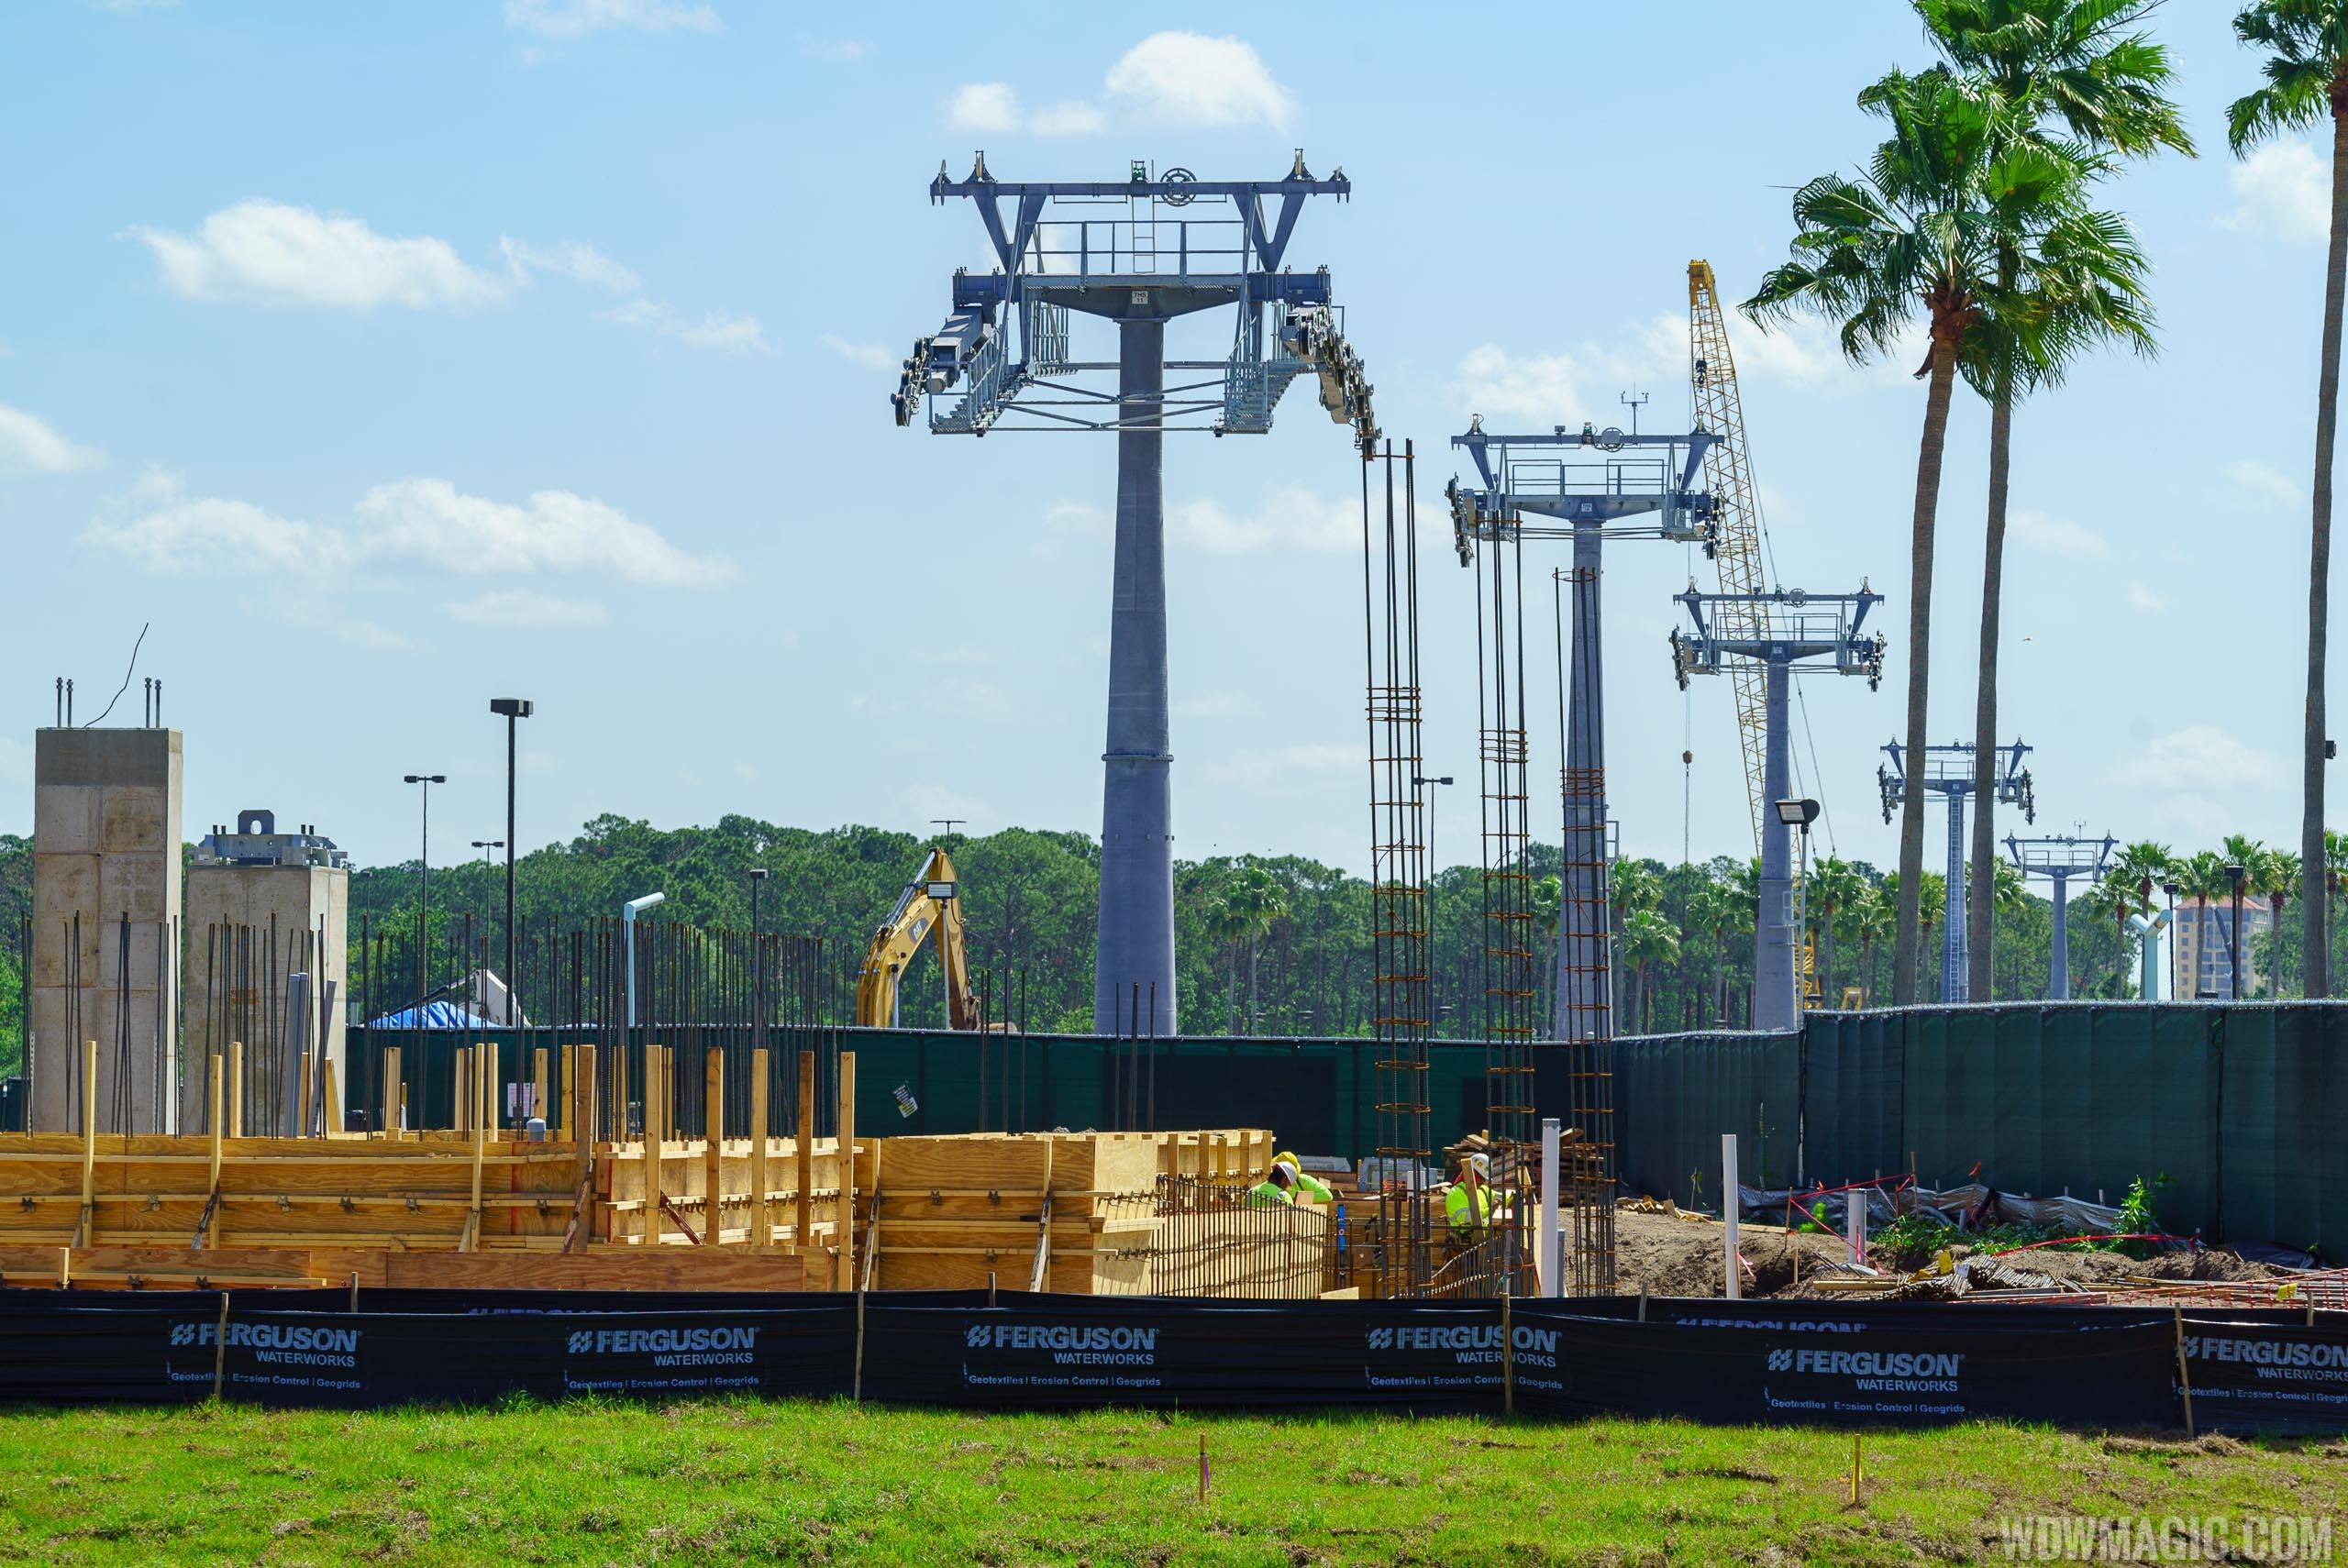 Disney Skyliner construction at Disney's Hollywood Studios